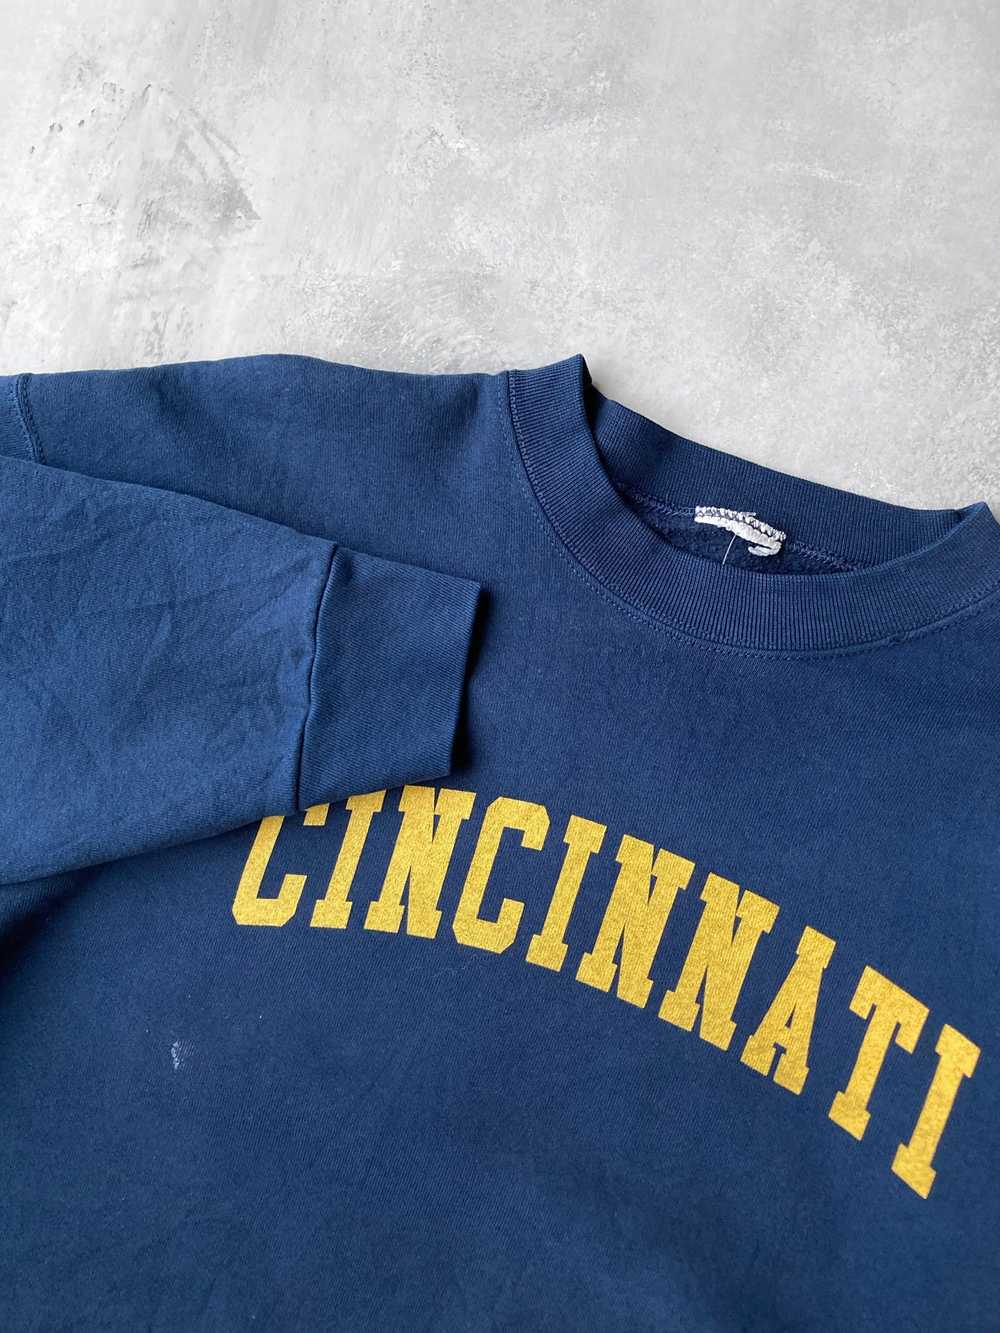 Cincinnati Sweatshirt 90's - XL - image 2